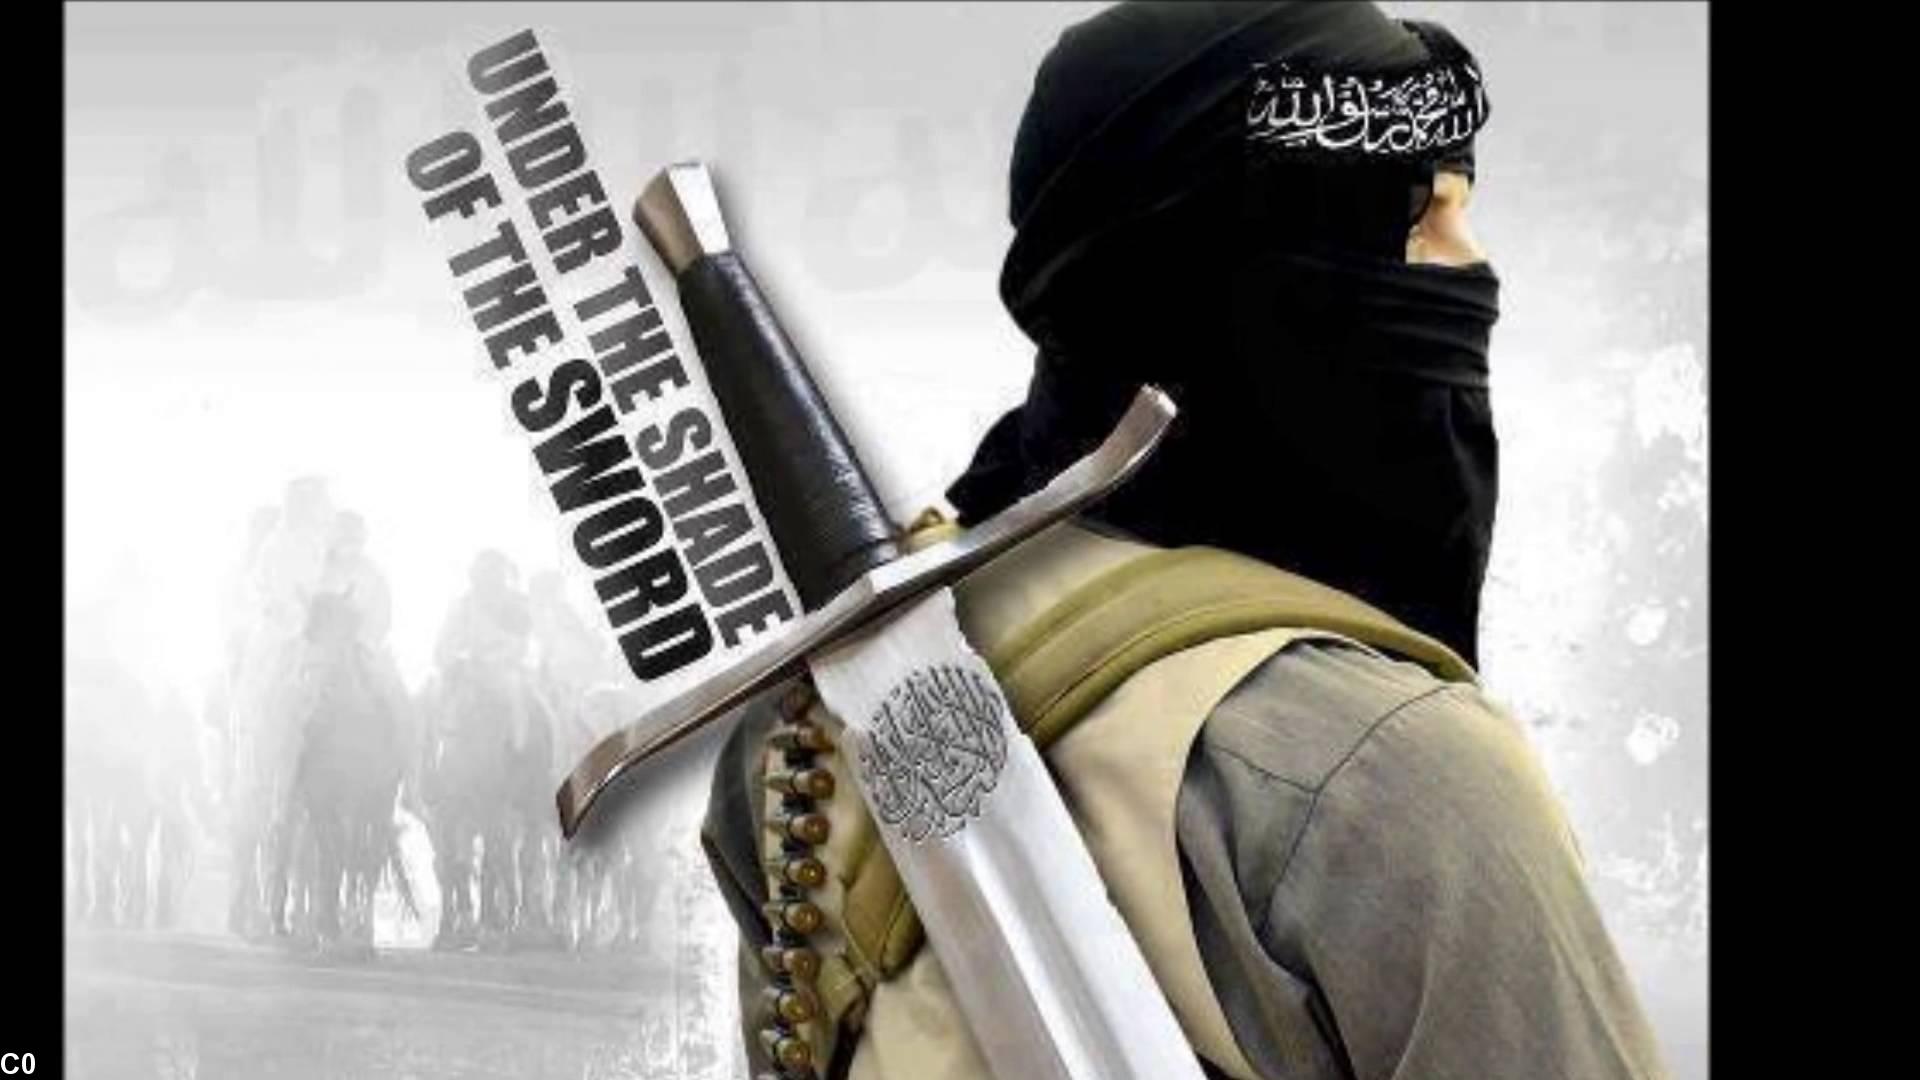 image de propagande jihadiste (prise sur youtube)